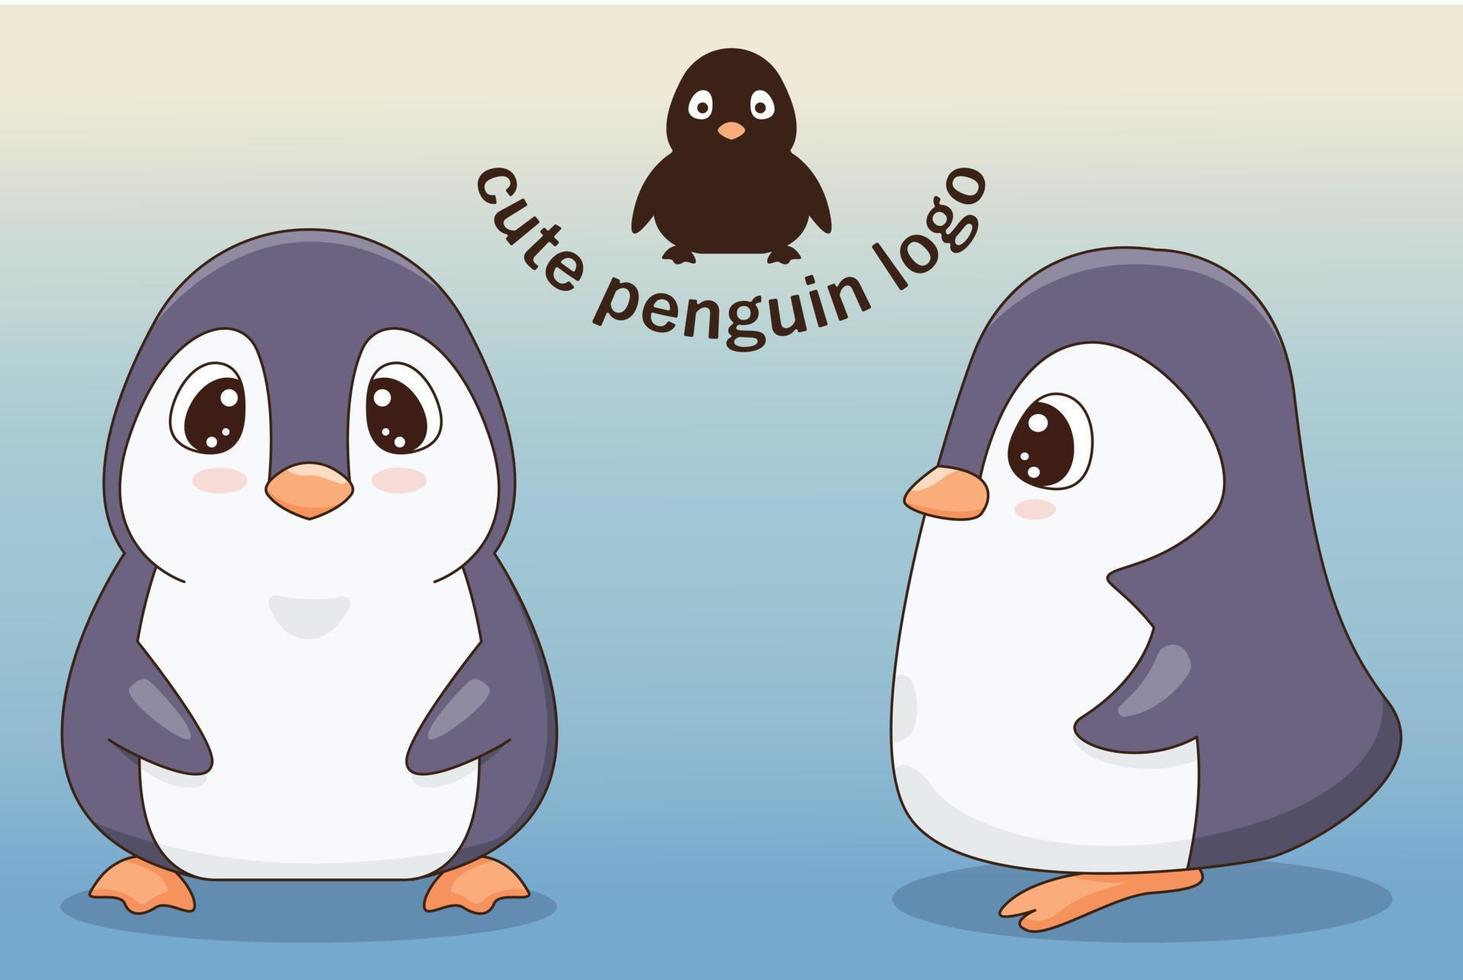 cute cartoon baby penguins